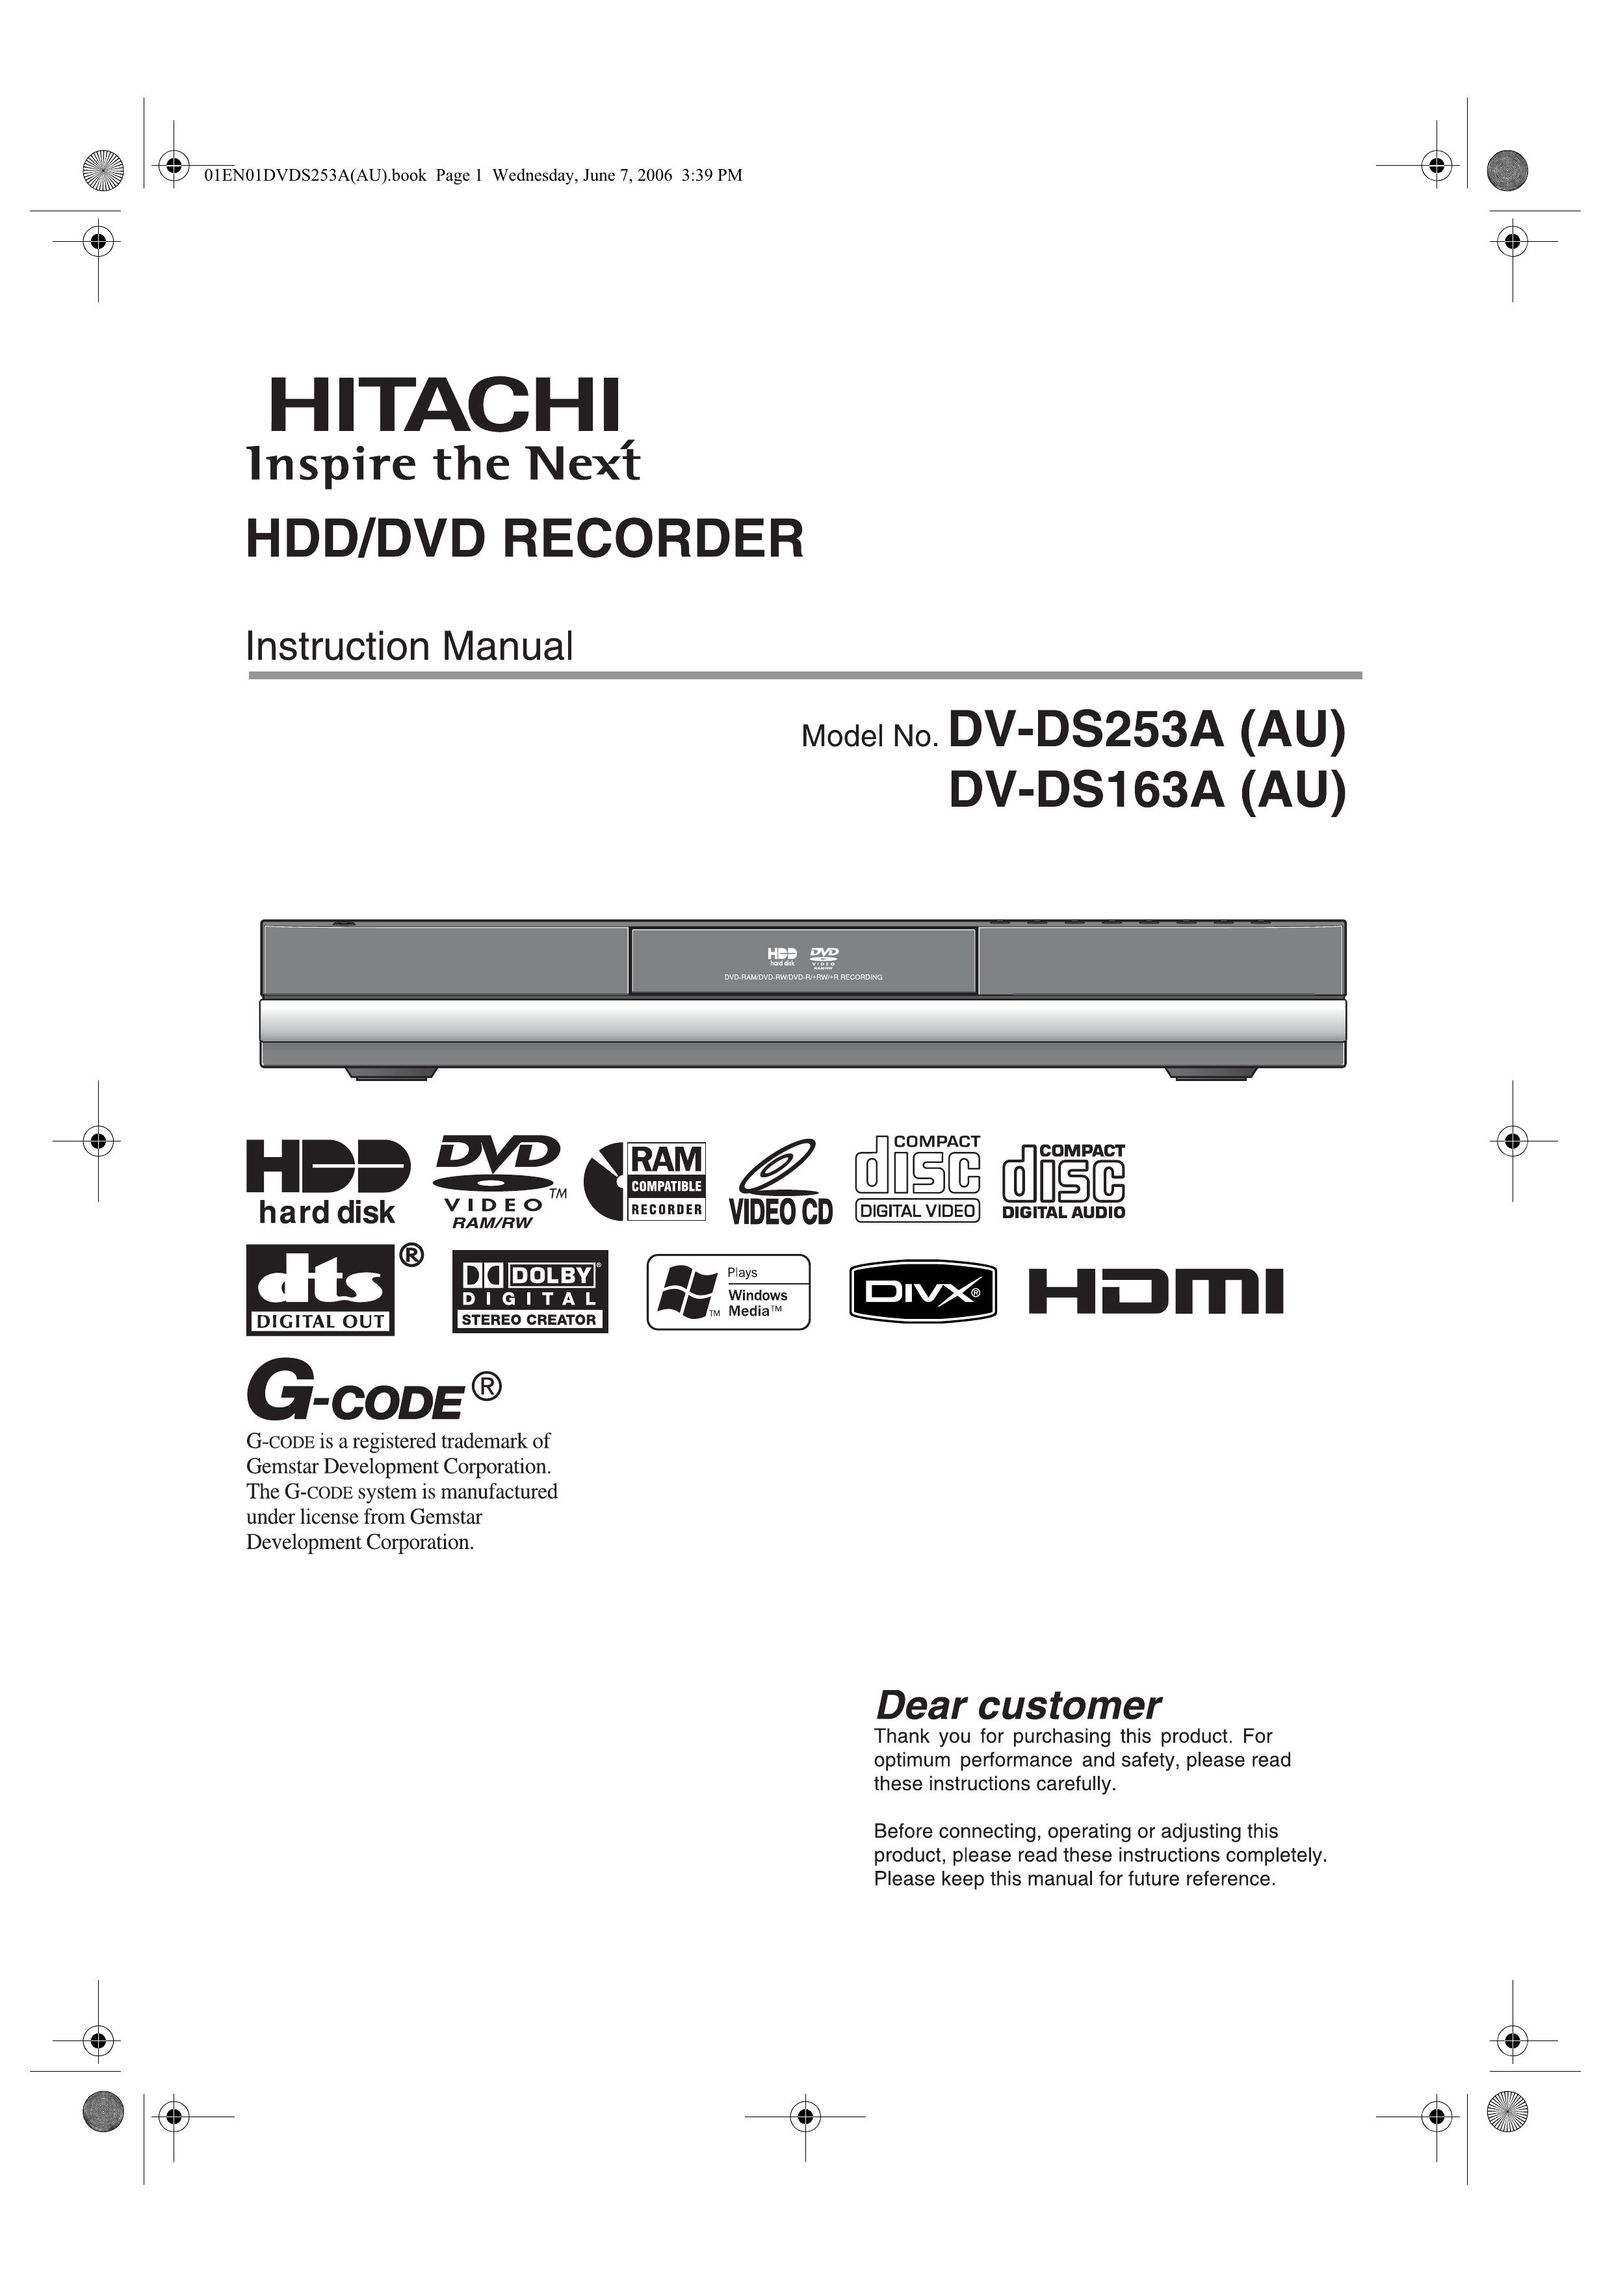 Hitachi DV-DS163A DVR User Manual